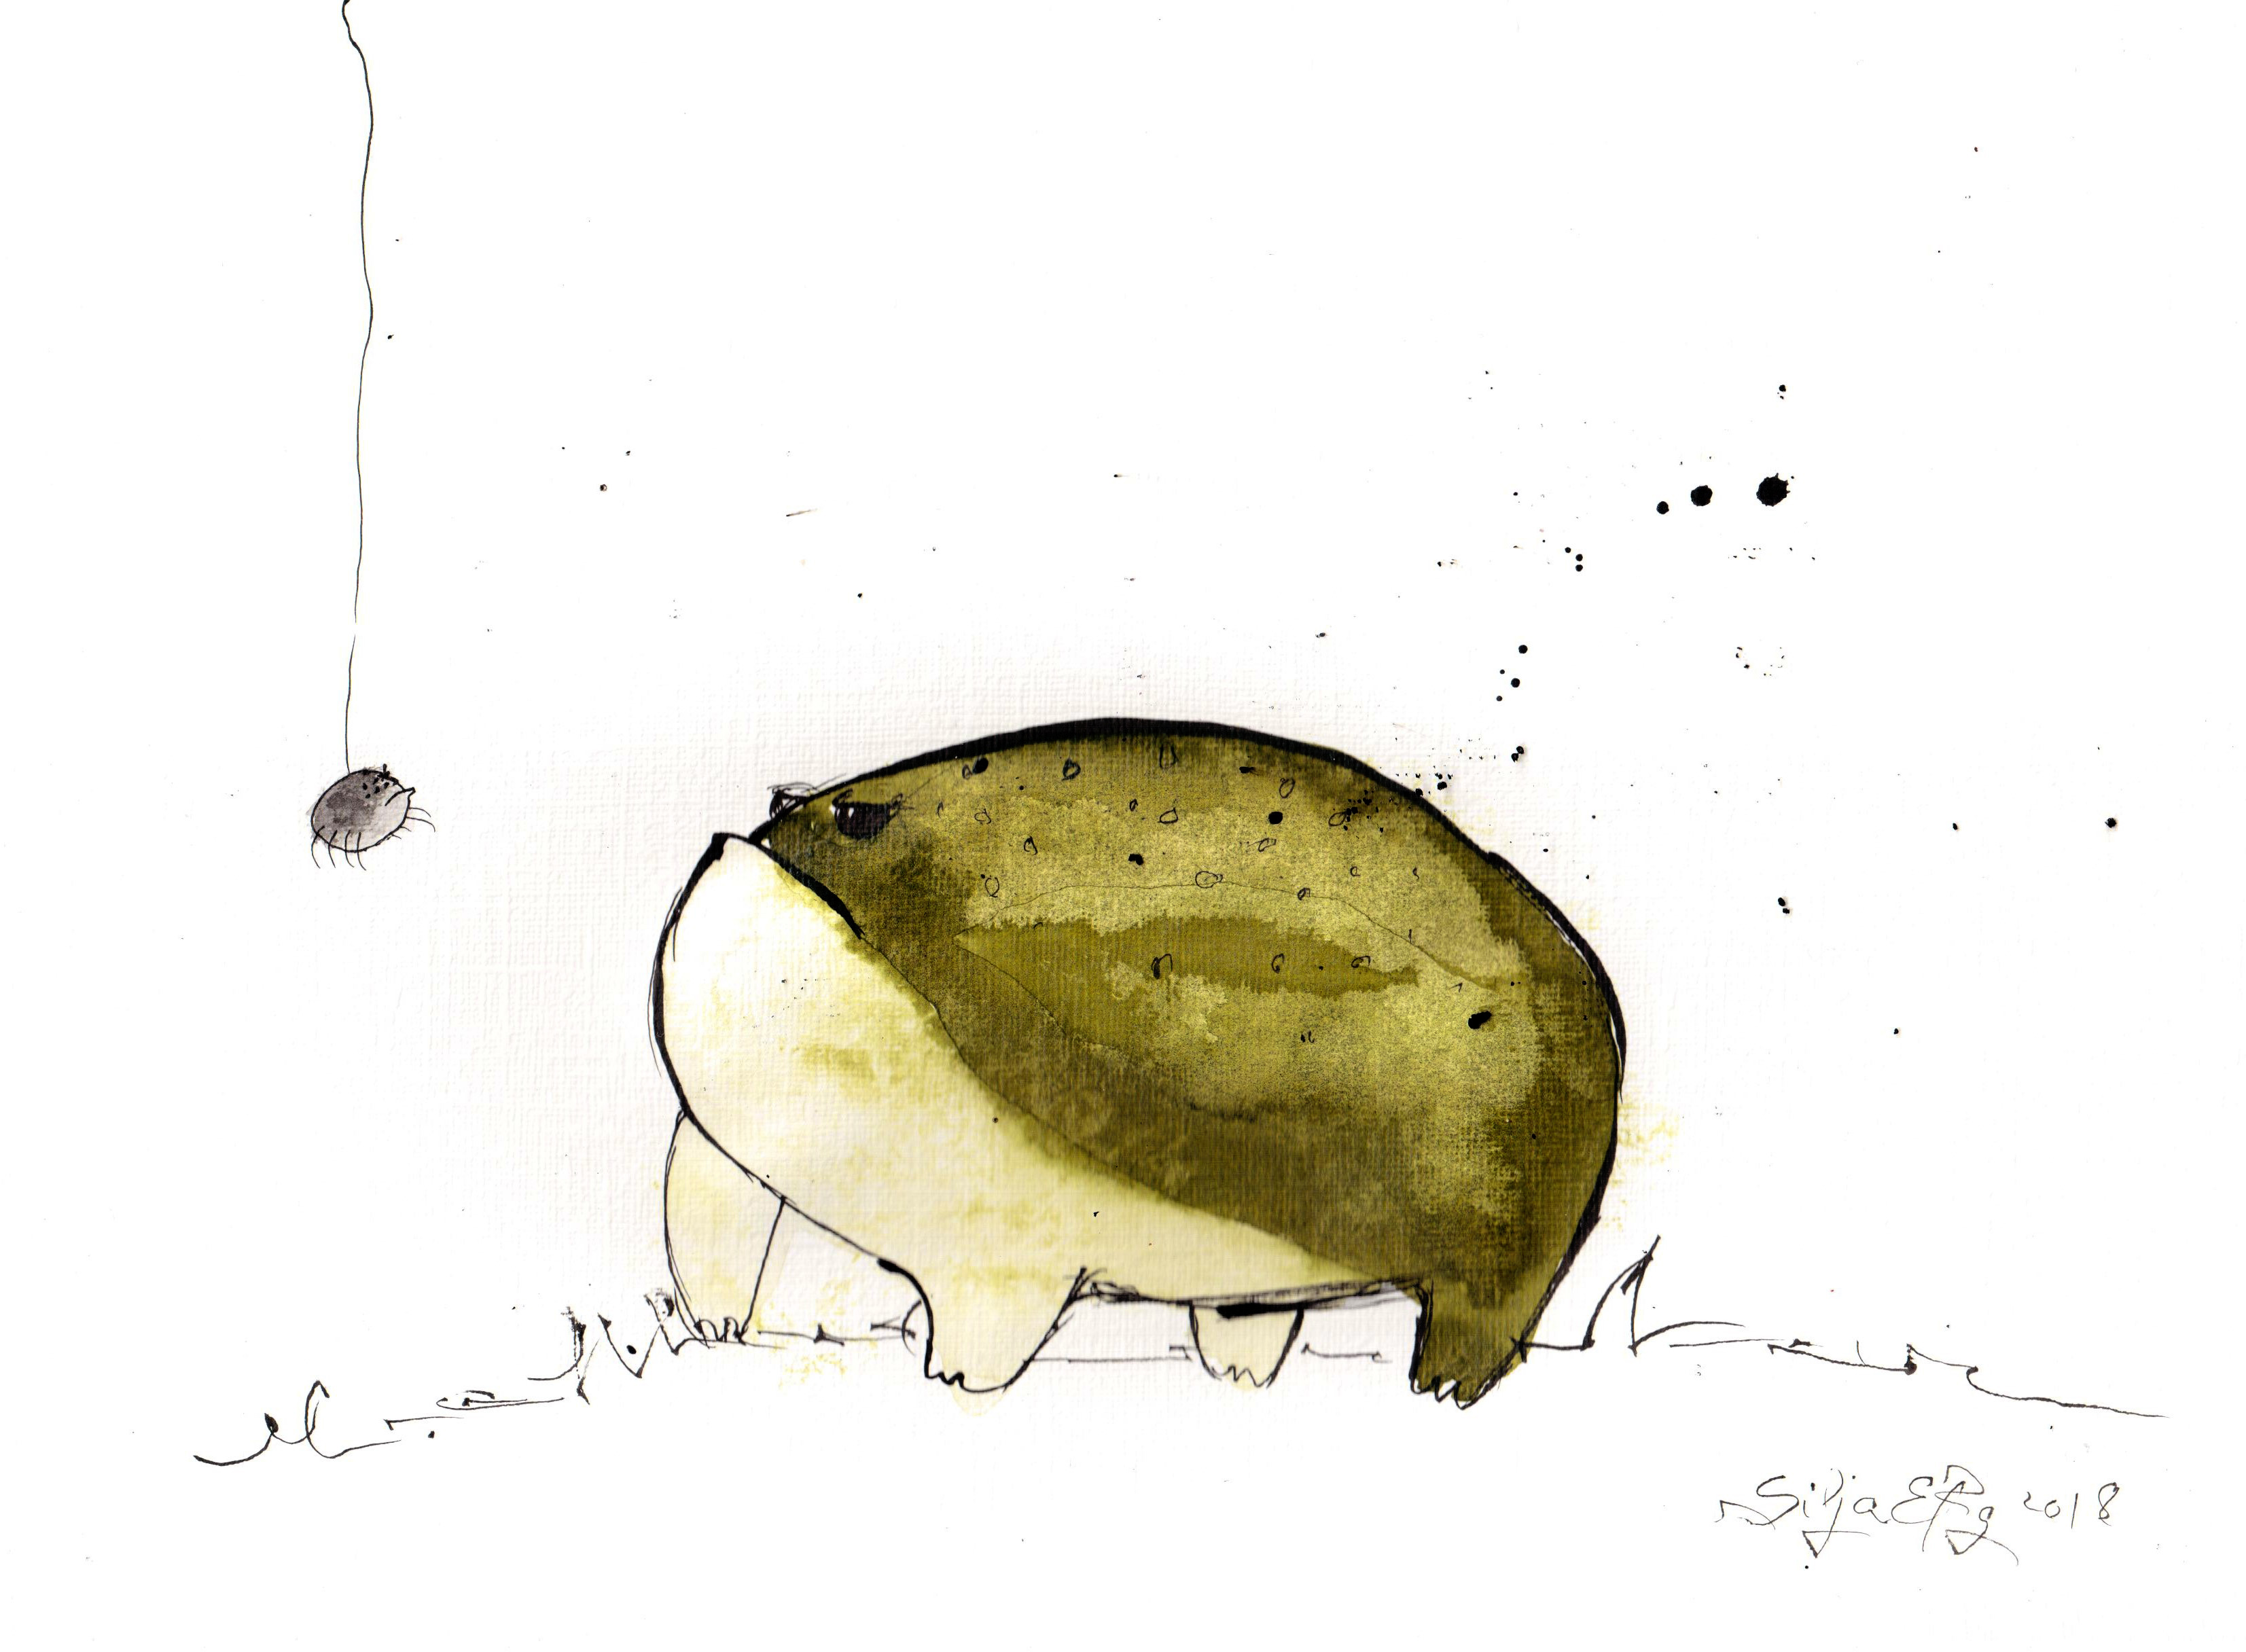 grumpy toad cartoon drawing ugly cute frog art by 5erg